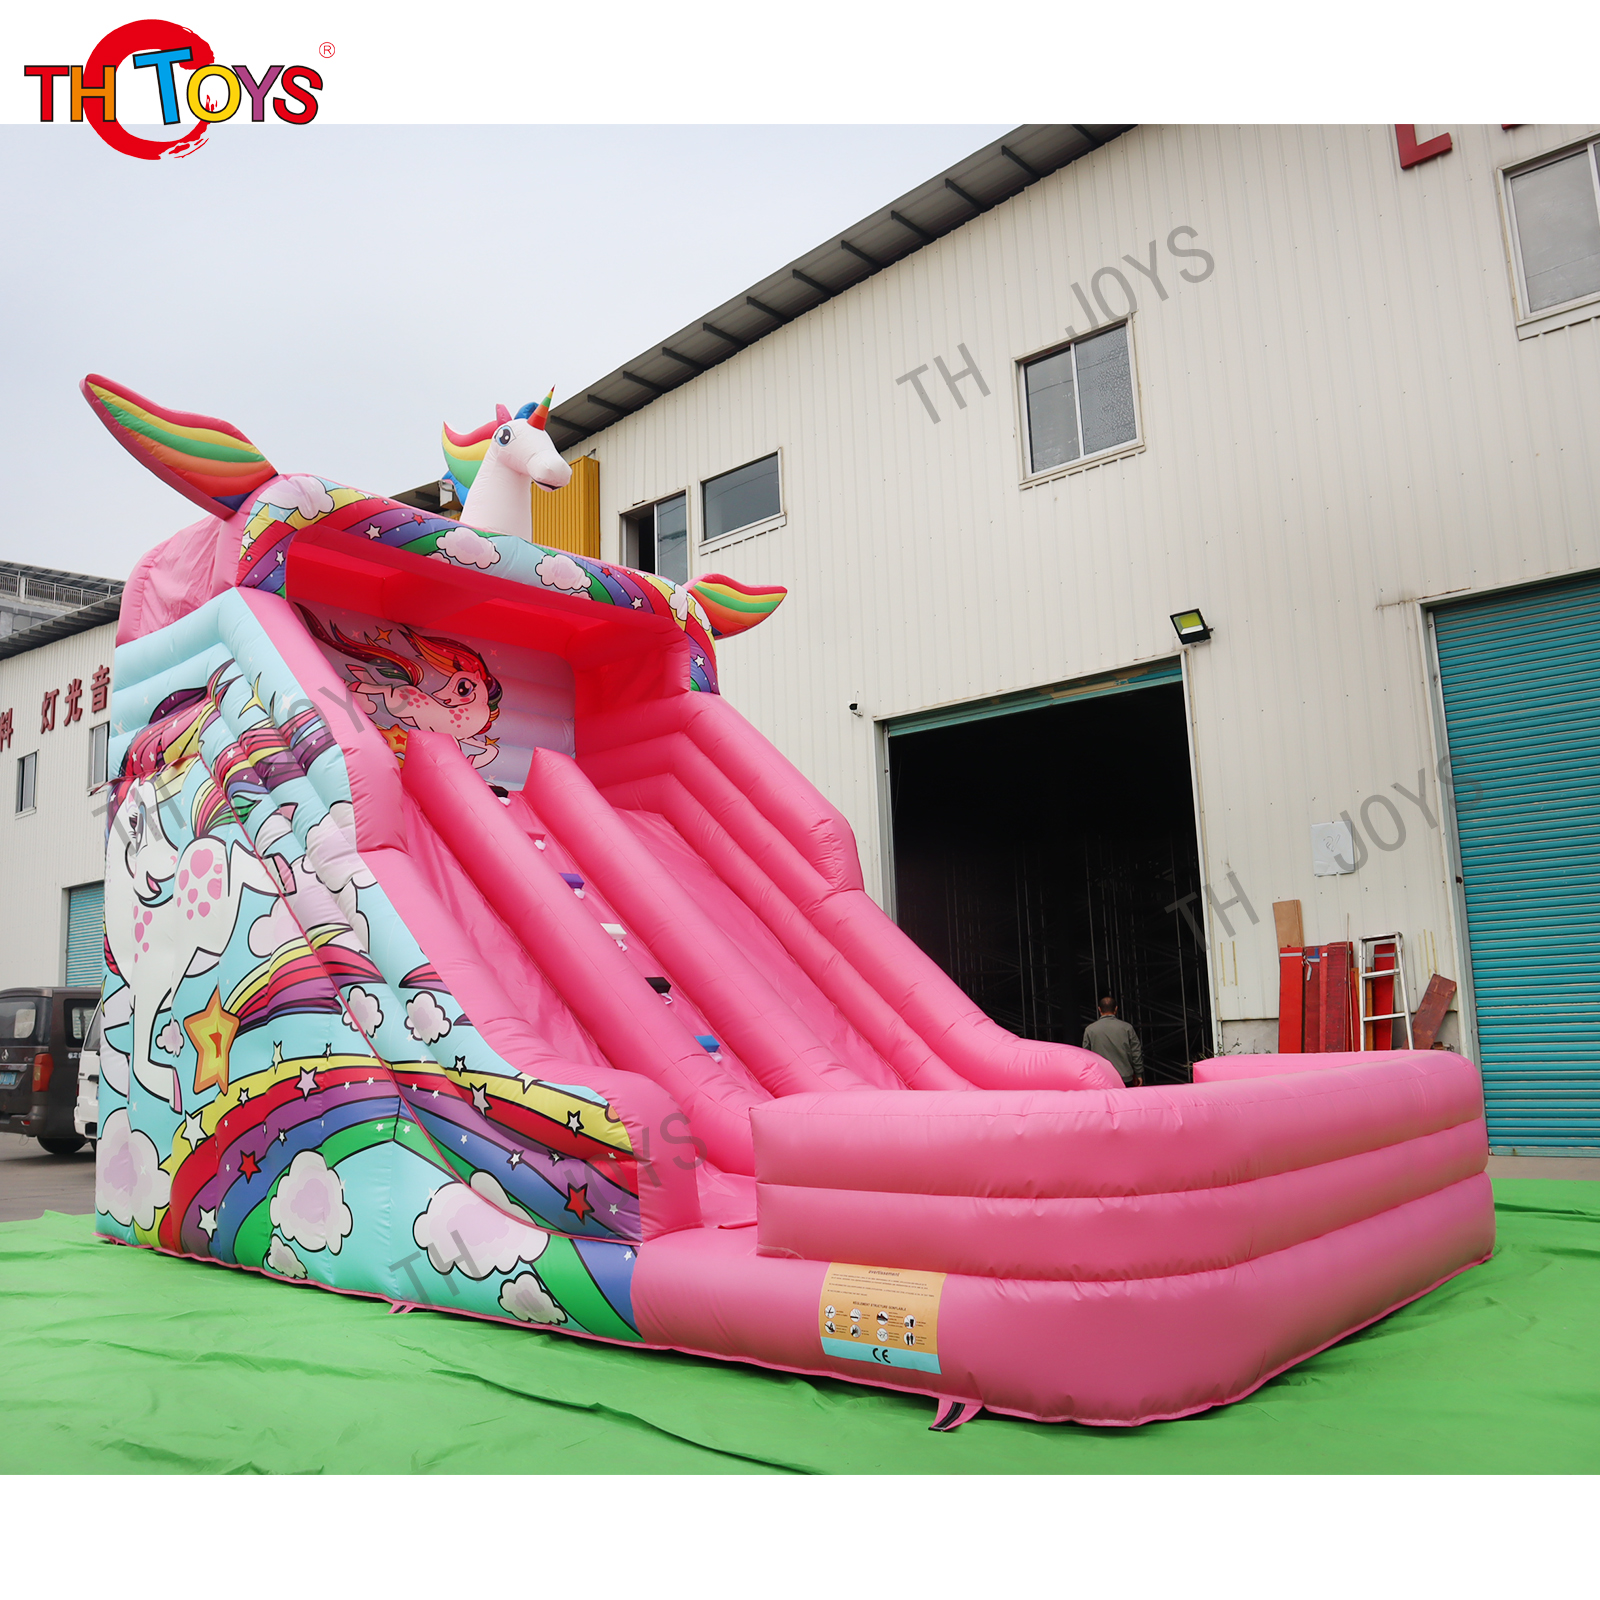 Inflatable slide-32